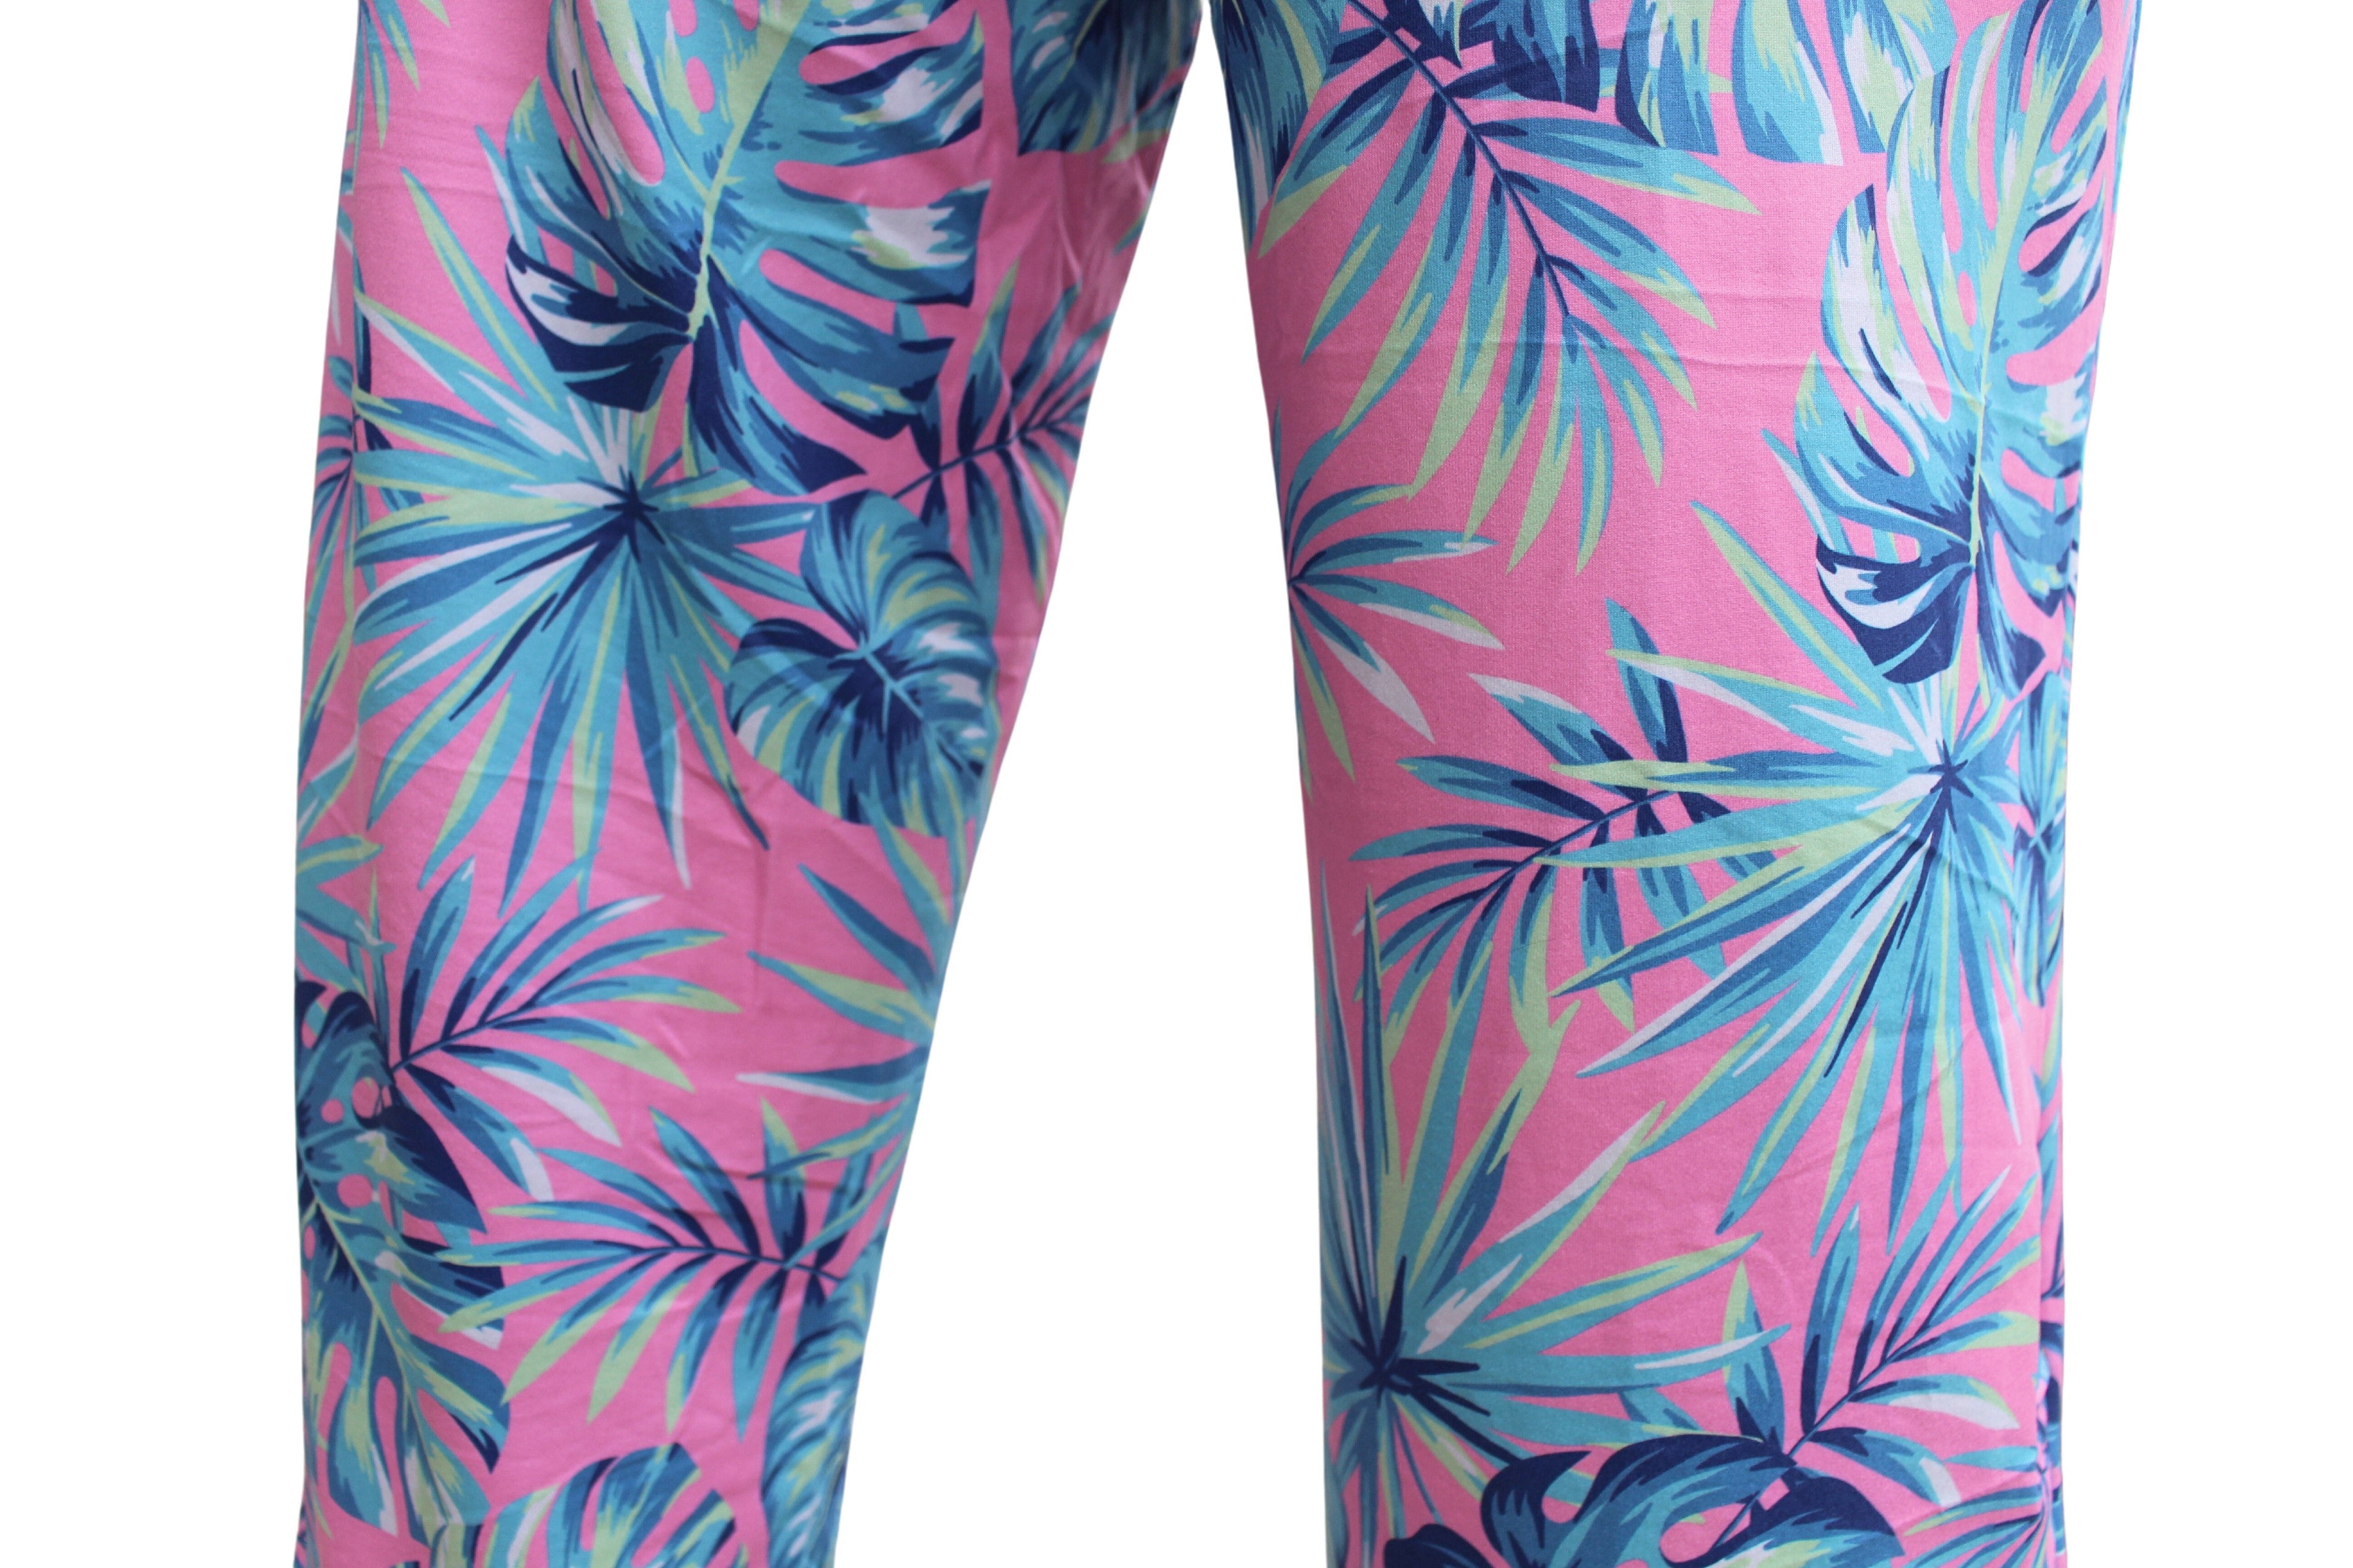 Tropical Leaf Pajama Lounge Pants close up view of tropical leaf pattern